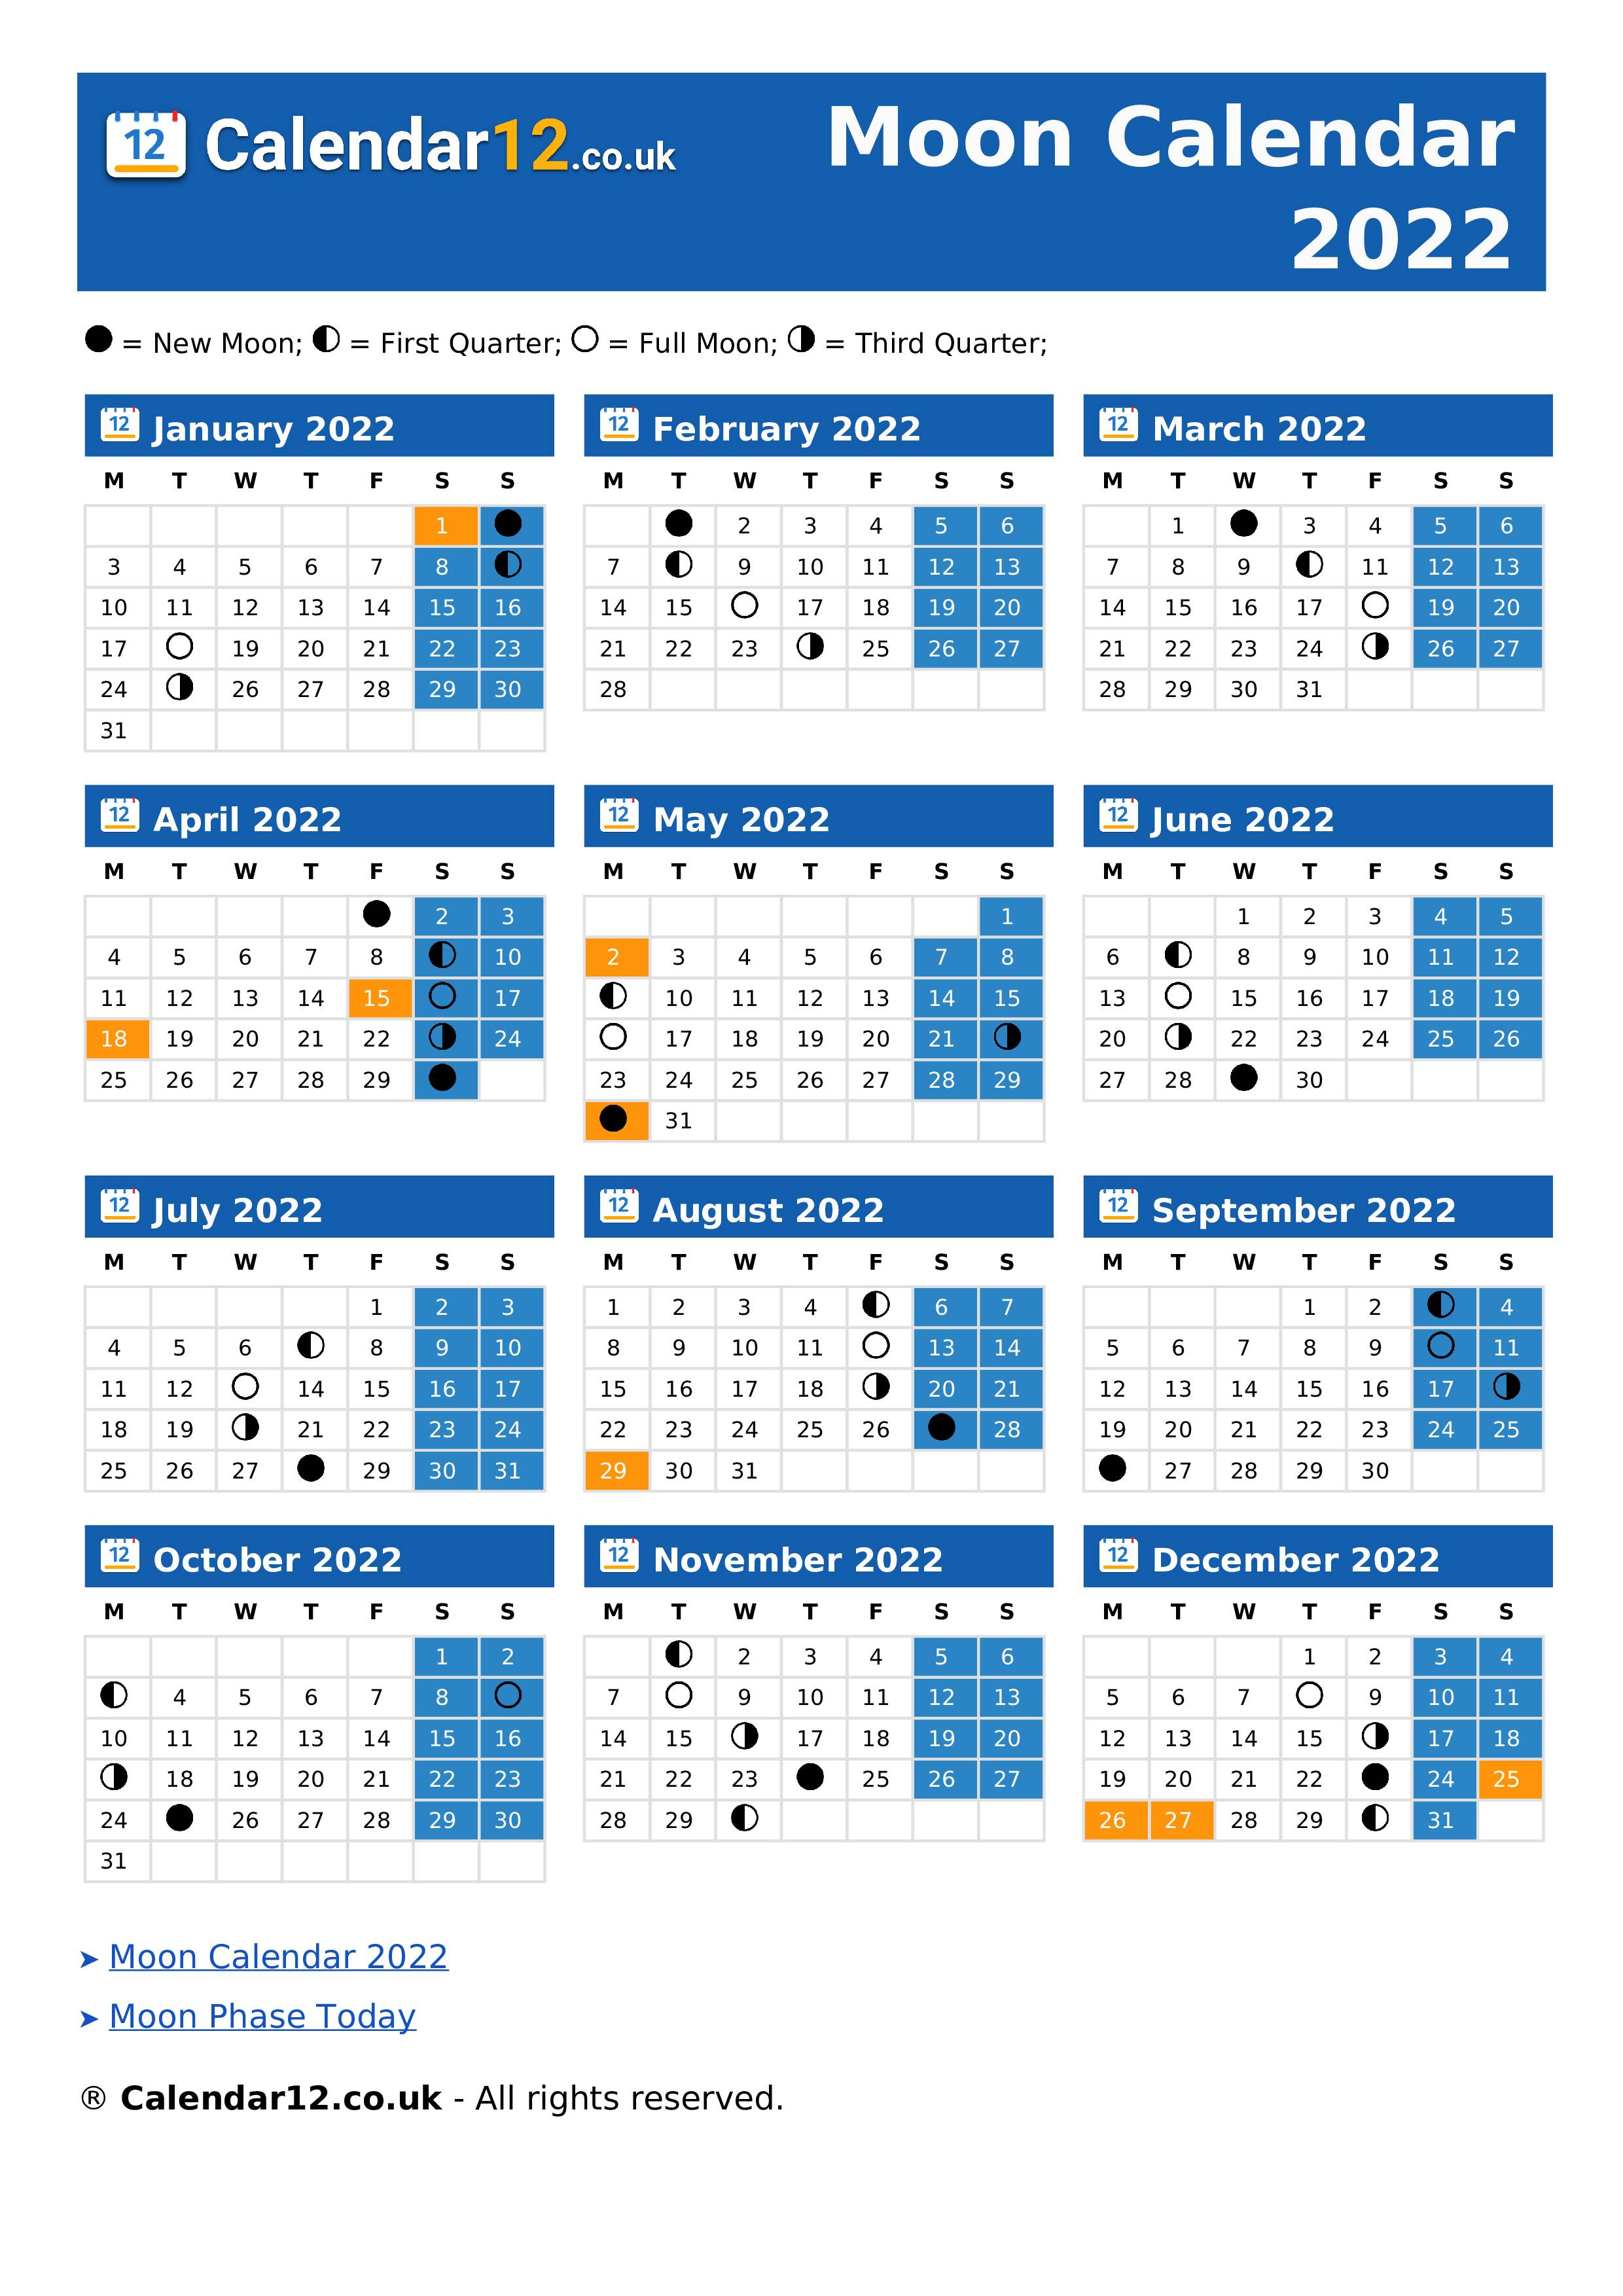 Lunar Calendar October 2022 Moon Calendar October 2022 ⬅️ — Calendar12.Co.uk